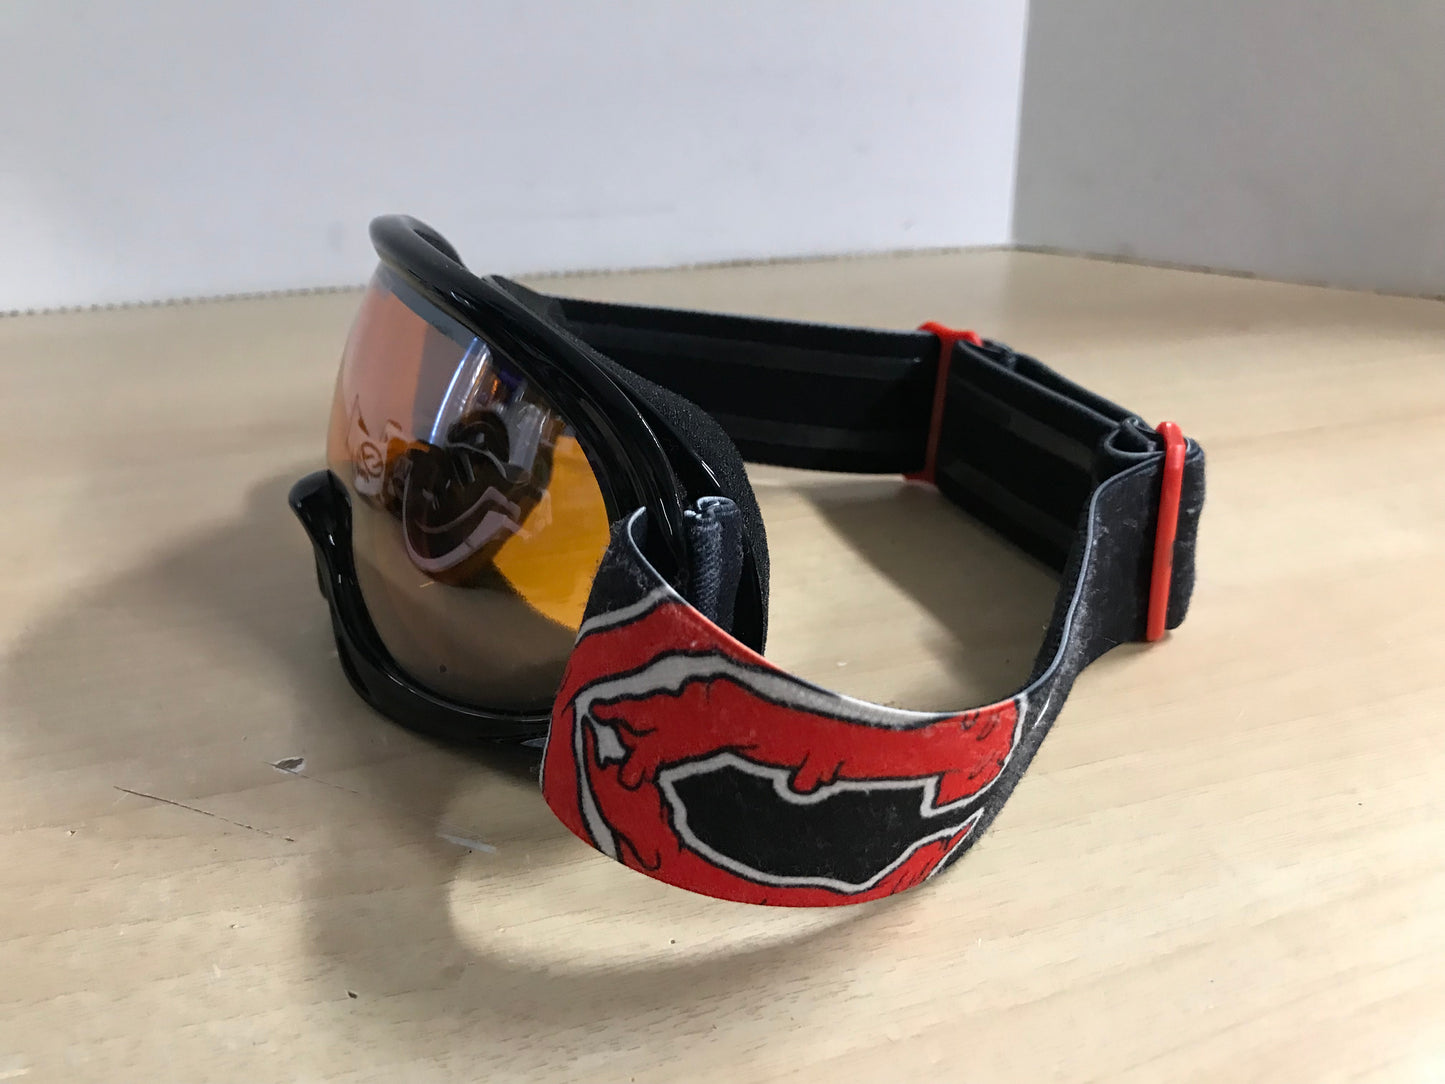 Ski Goggle Child Size 5-8 Capix Red Black Big Orange Lense Excellent